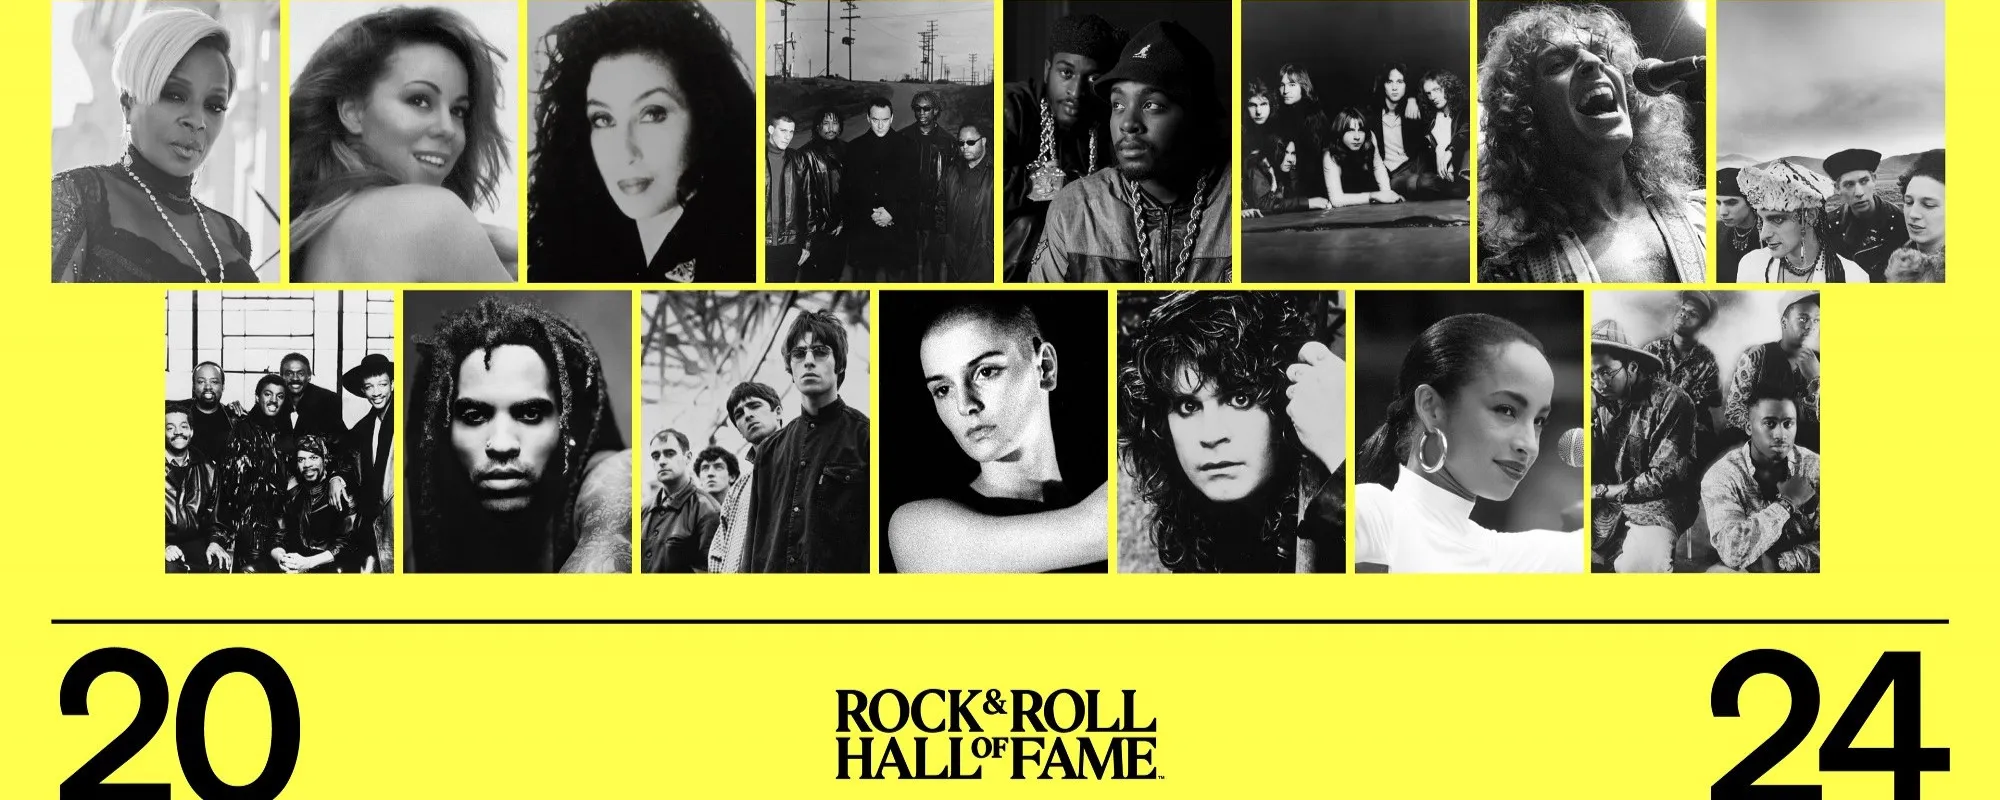 Foreigner’s Lou Gramm Thanks Rock & Roll Hall of Fame, Talks Mick Jones’ Parkinson’s Battle